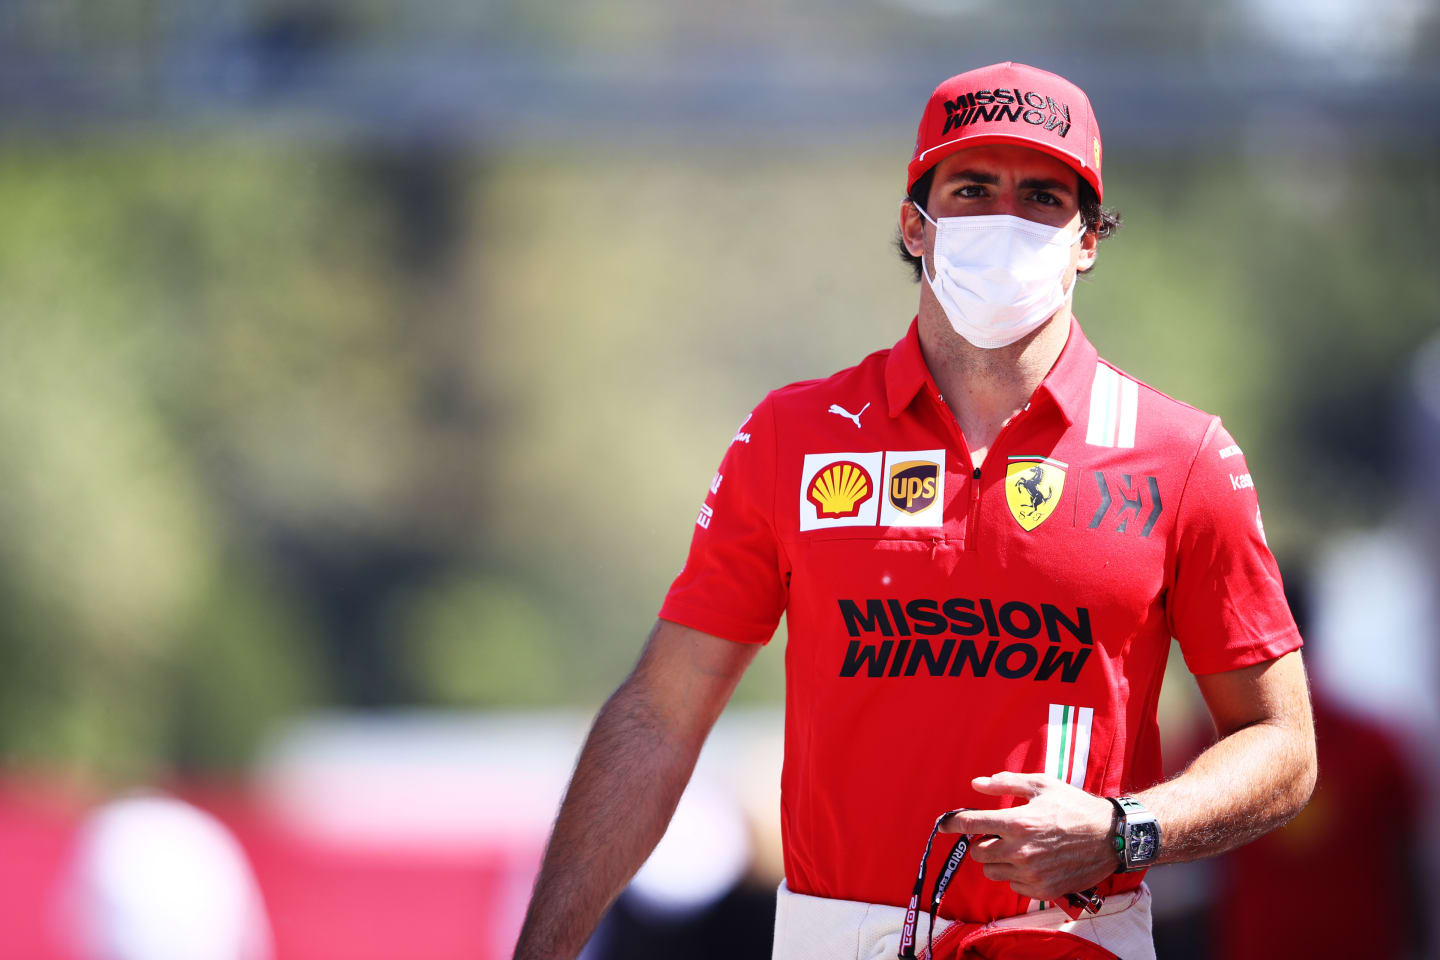 BARCELONA, SPAIN - MAY 06: Carlos Sainz of Spain and Ferrari walks in the Paddock during previews